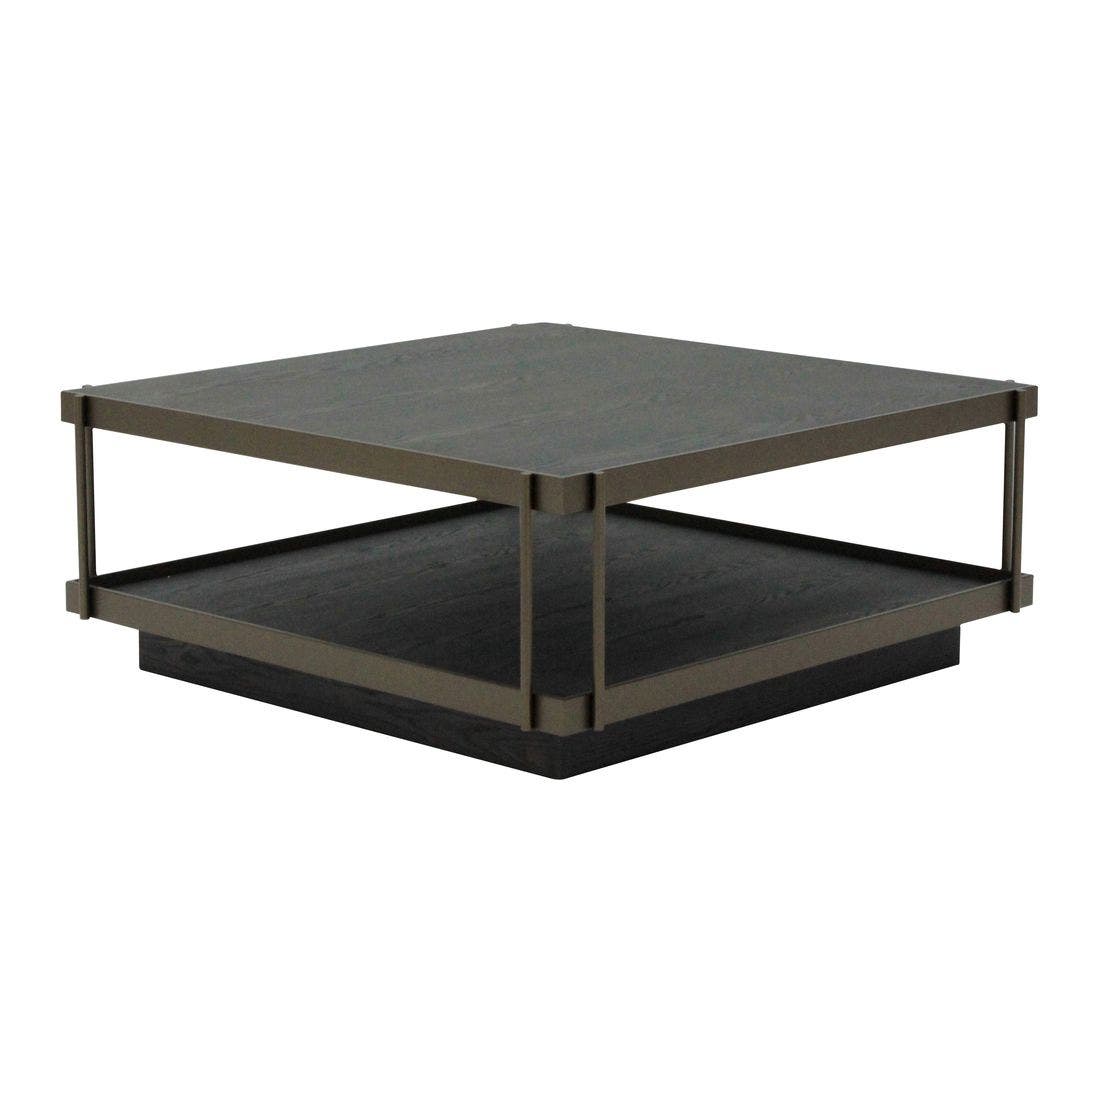 19184667-ocasio-furniture-living-room-coffee-table-01